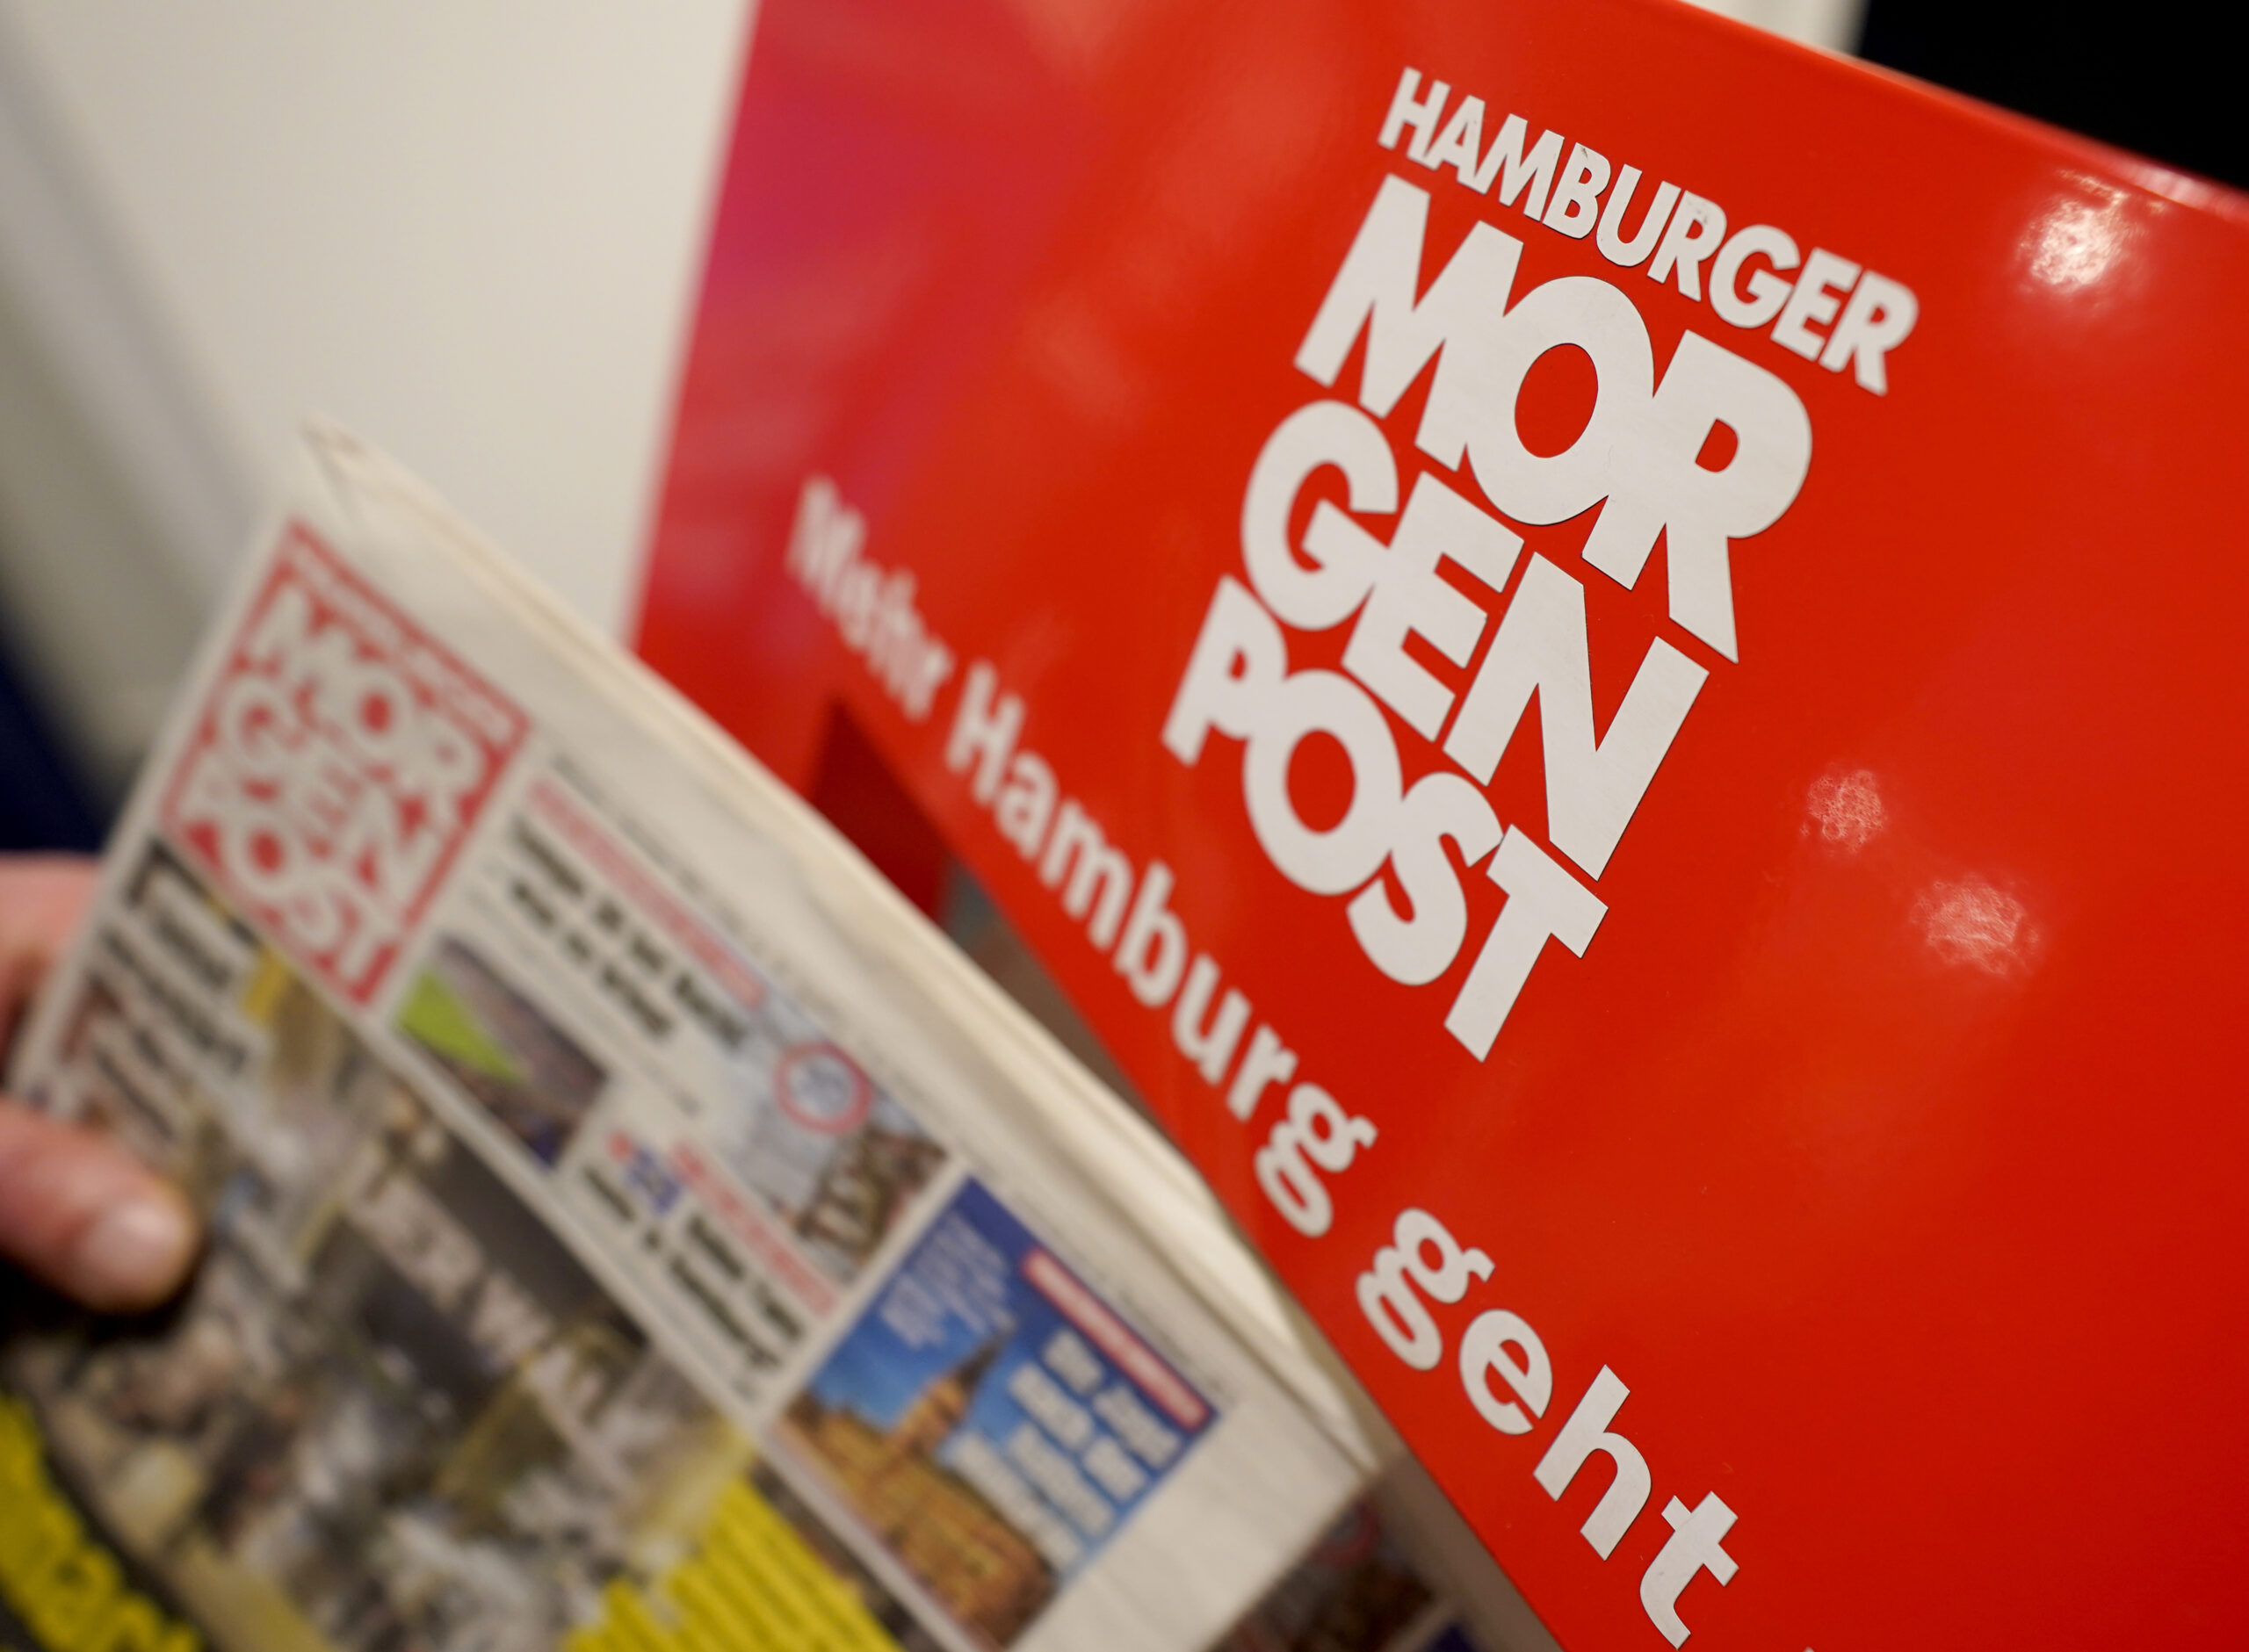 Tageszeitung "Hamburger Morgenpost"